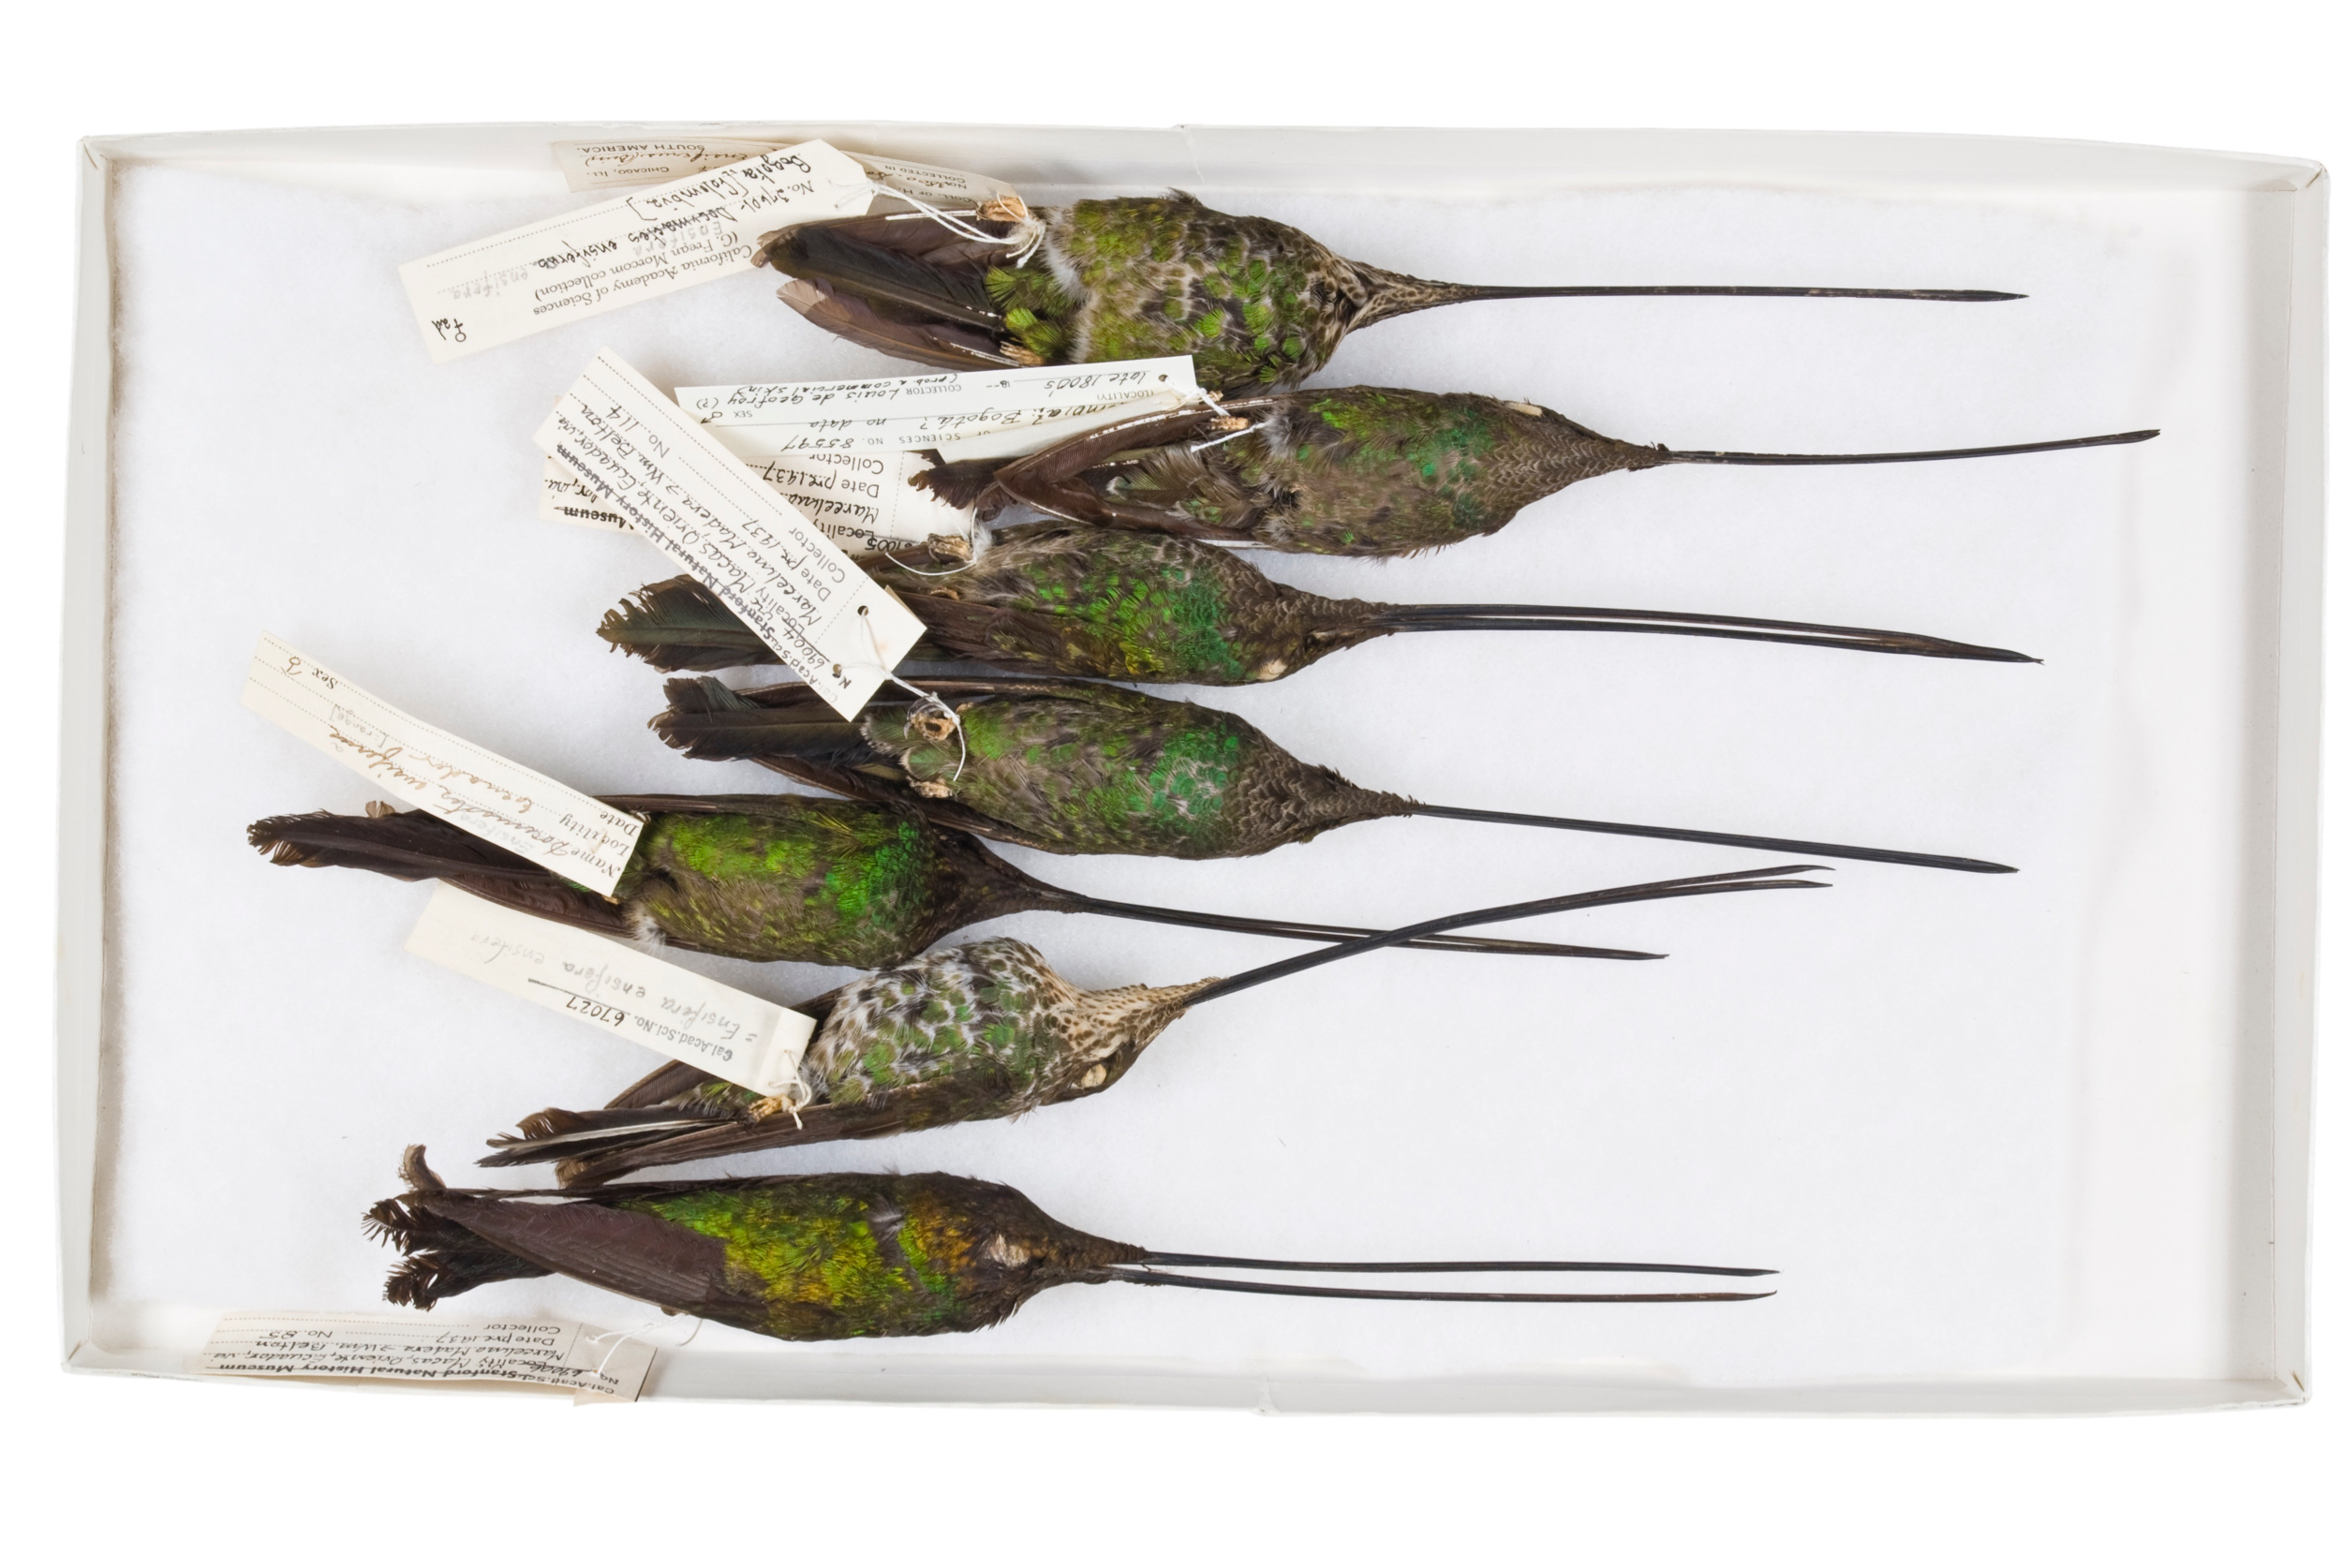   sword-billed hummingbirds 1   8" x 12" or 12" x 18"  2007    